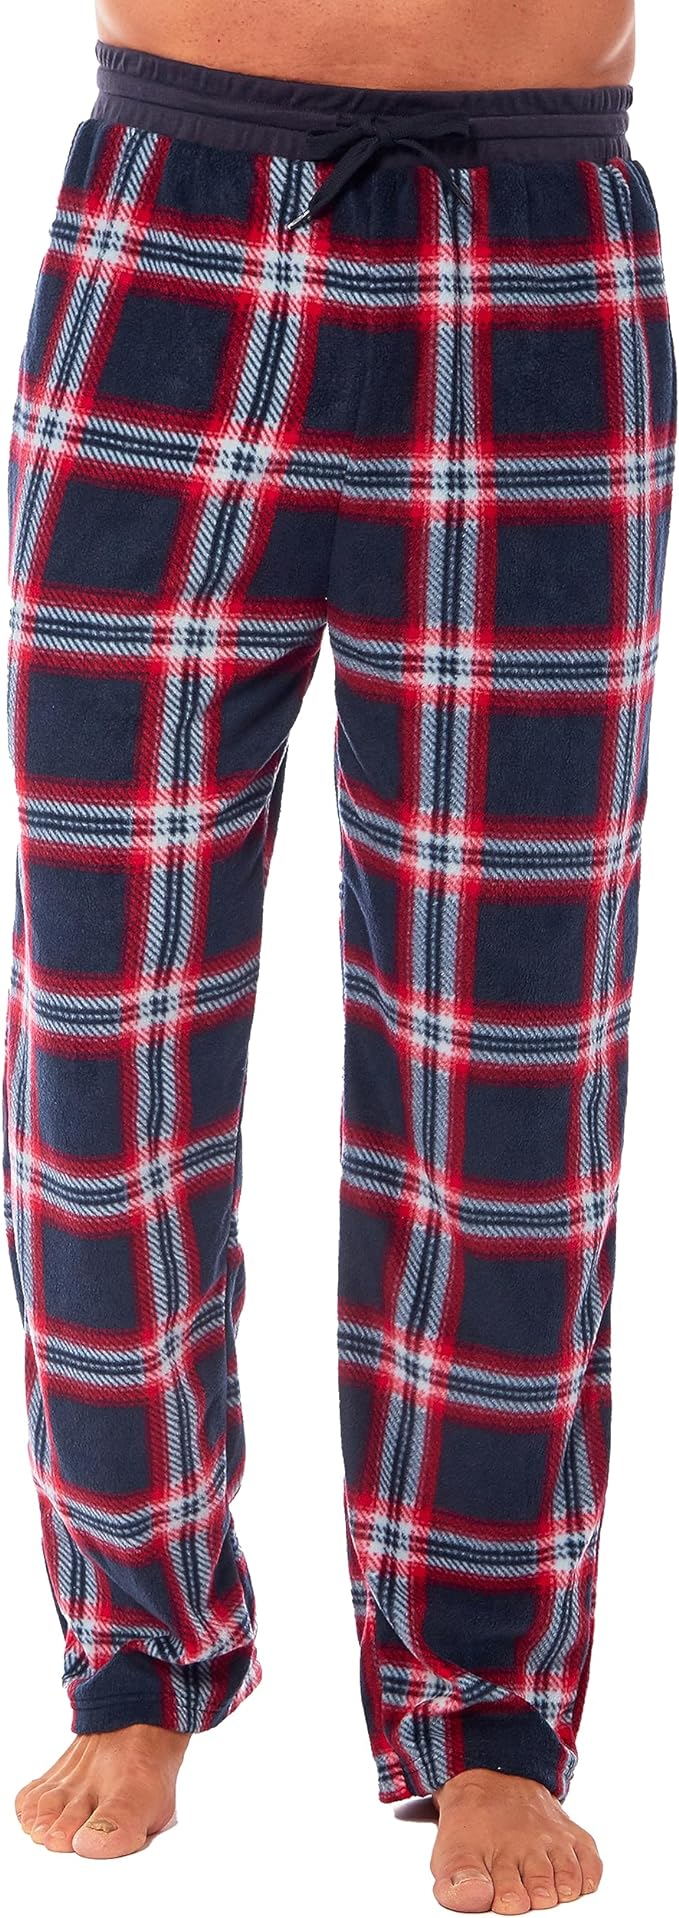 Men's Fleece Lounge Pants Super Soft PJ Sleepwear Nightwear Check Design. Buy now for £15.00. A Lounge Pant by Toro Rocco. blue, check, check designs, design, everyday wear, fleece, grey, large, Lounge, loungewear, medium, Men, mens, navy, nightwear, pant